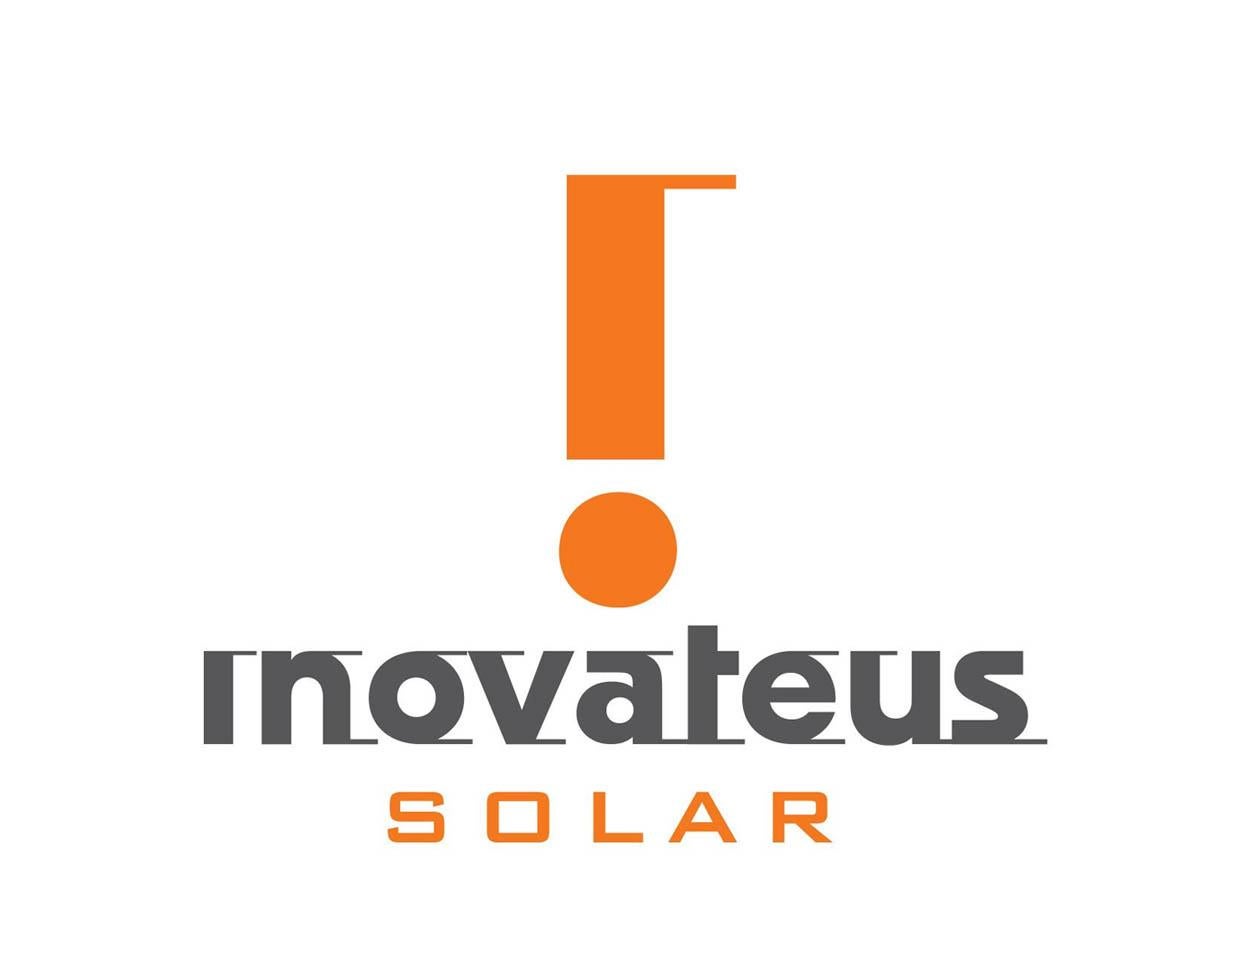 Inovateus Solar, LLC